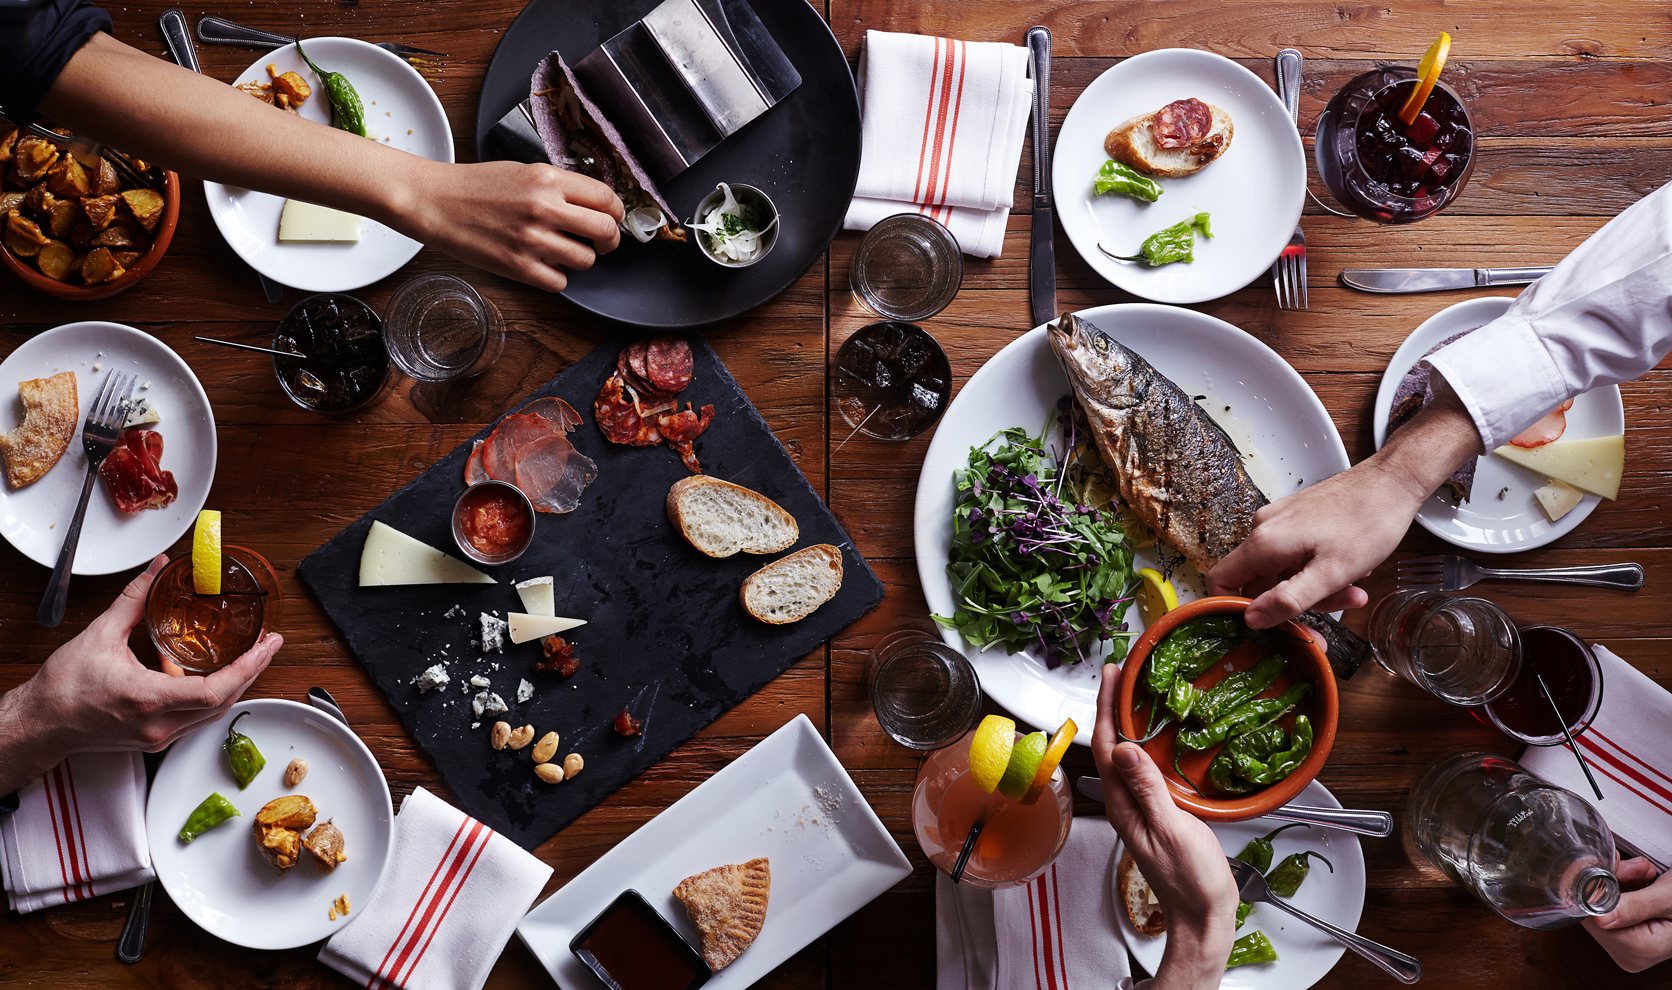 millennial-restaurants-changing-way-we-eat